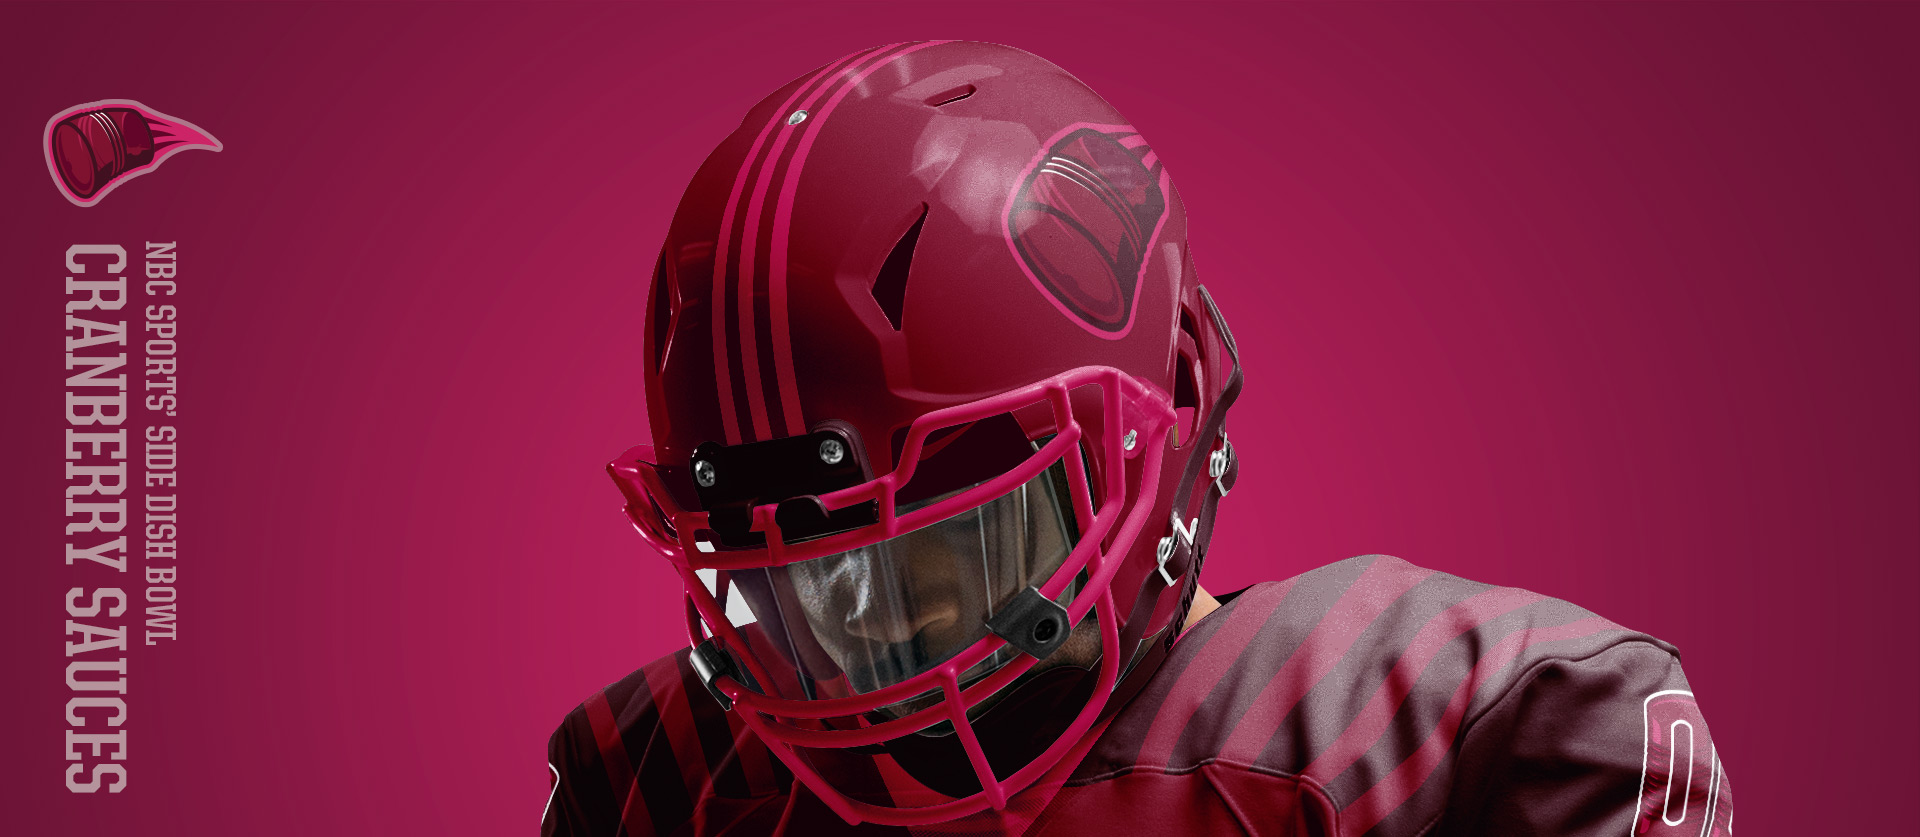 Cranberry Sauces Helmet Frontside - Football Uniform Design for NBC Sports Thanksgiving Side Dish Bowl